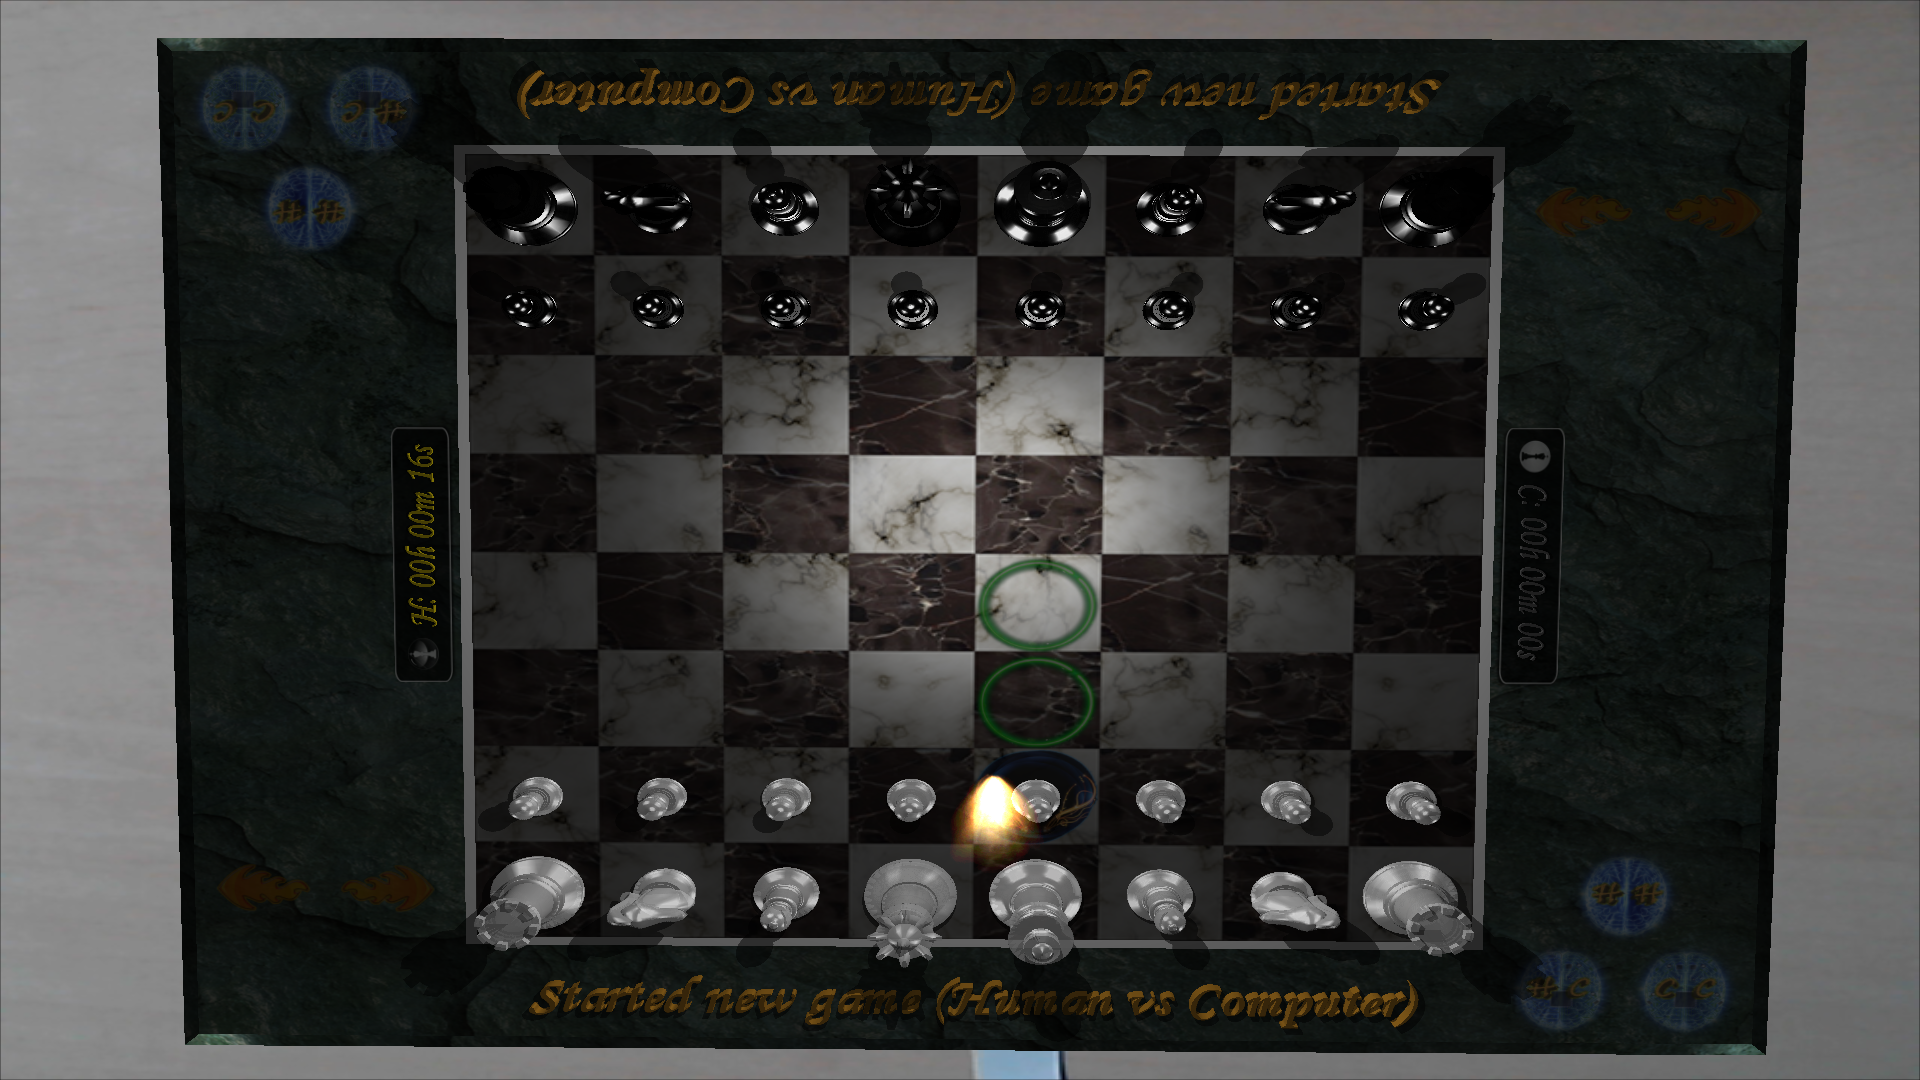 AR-Chess demo